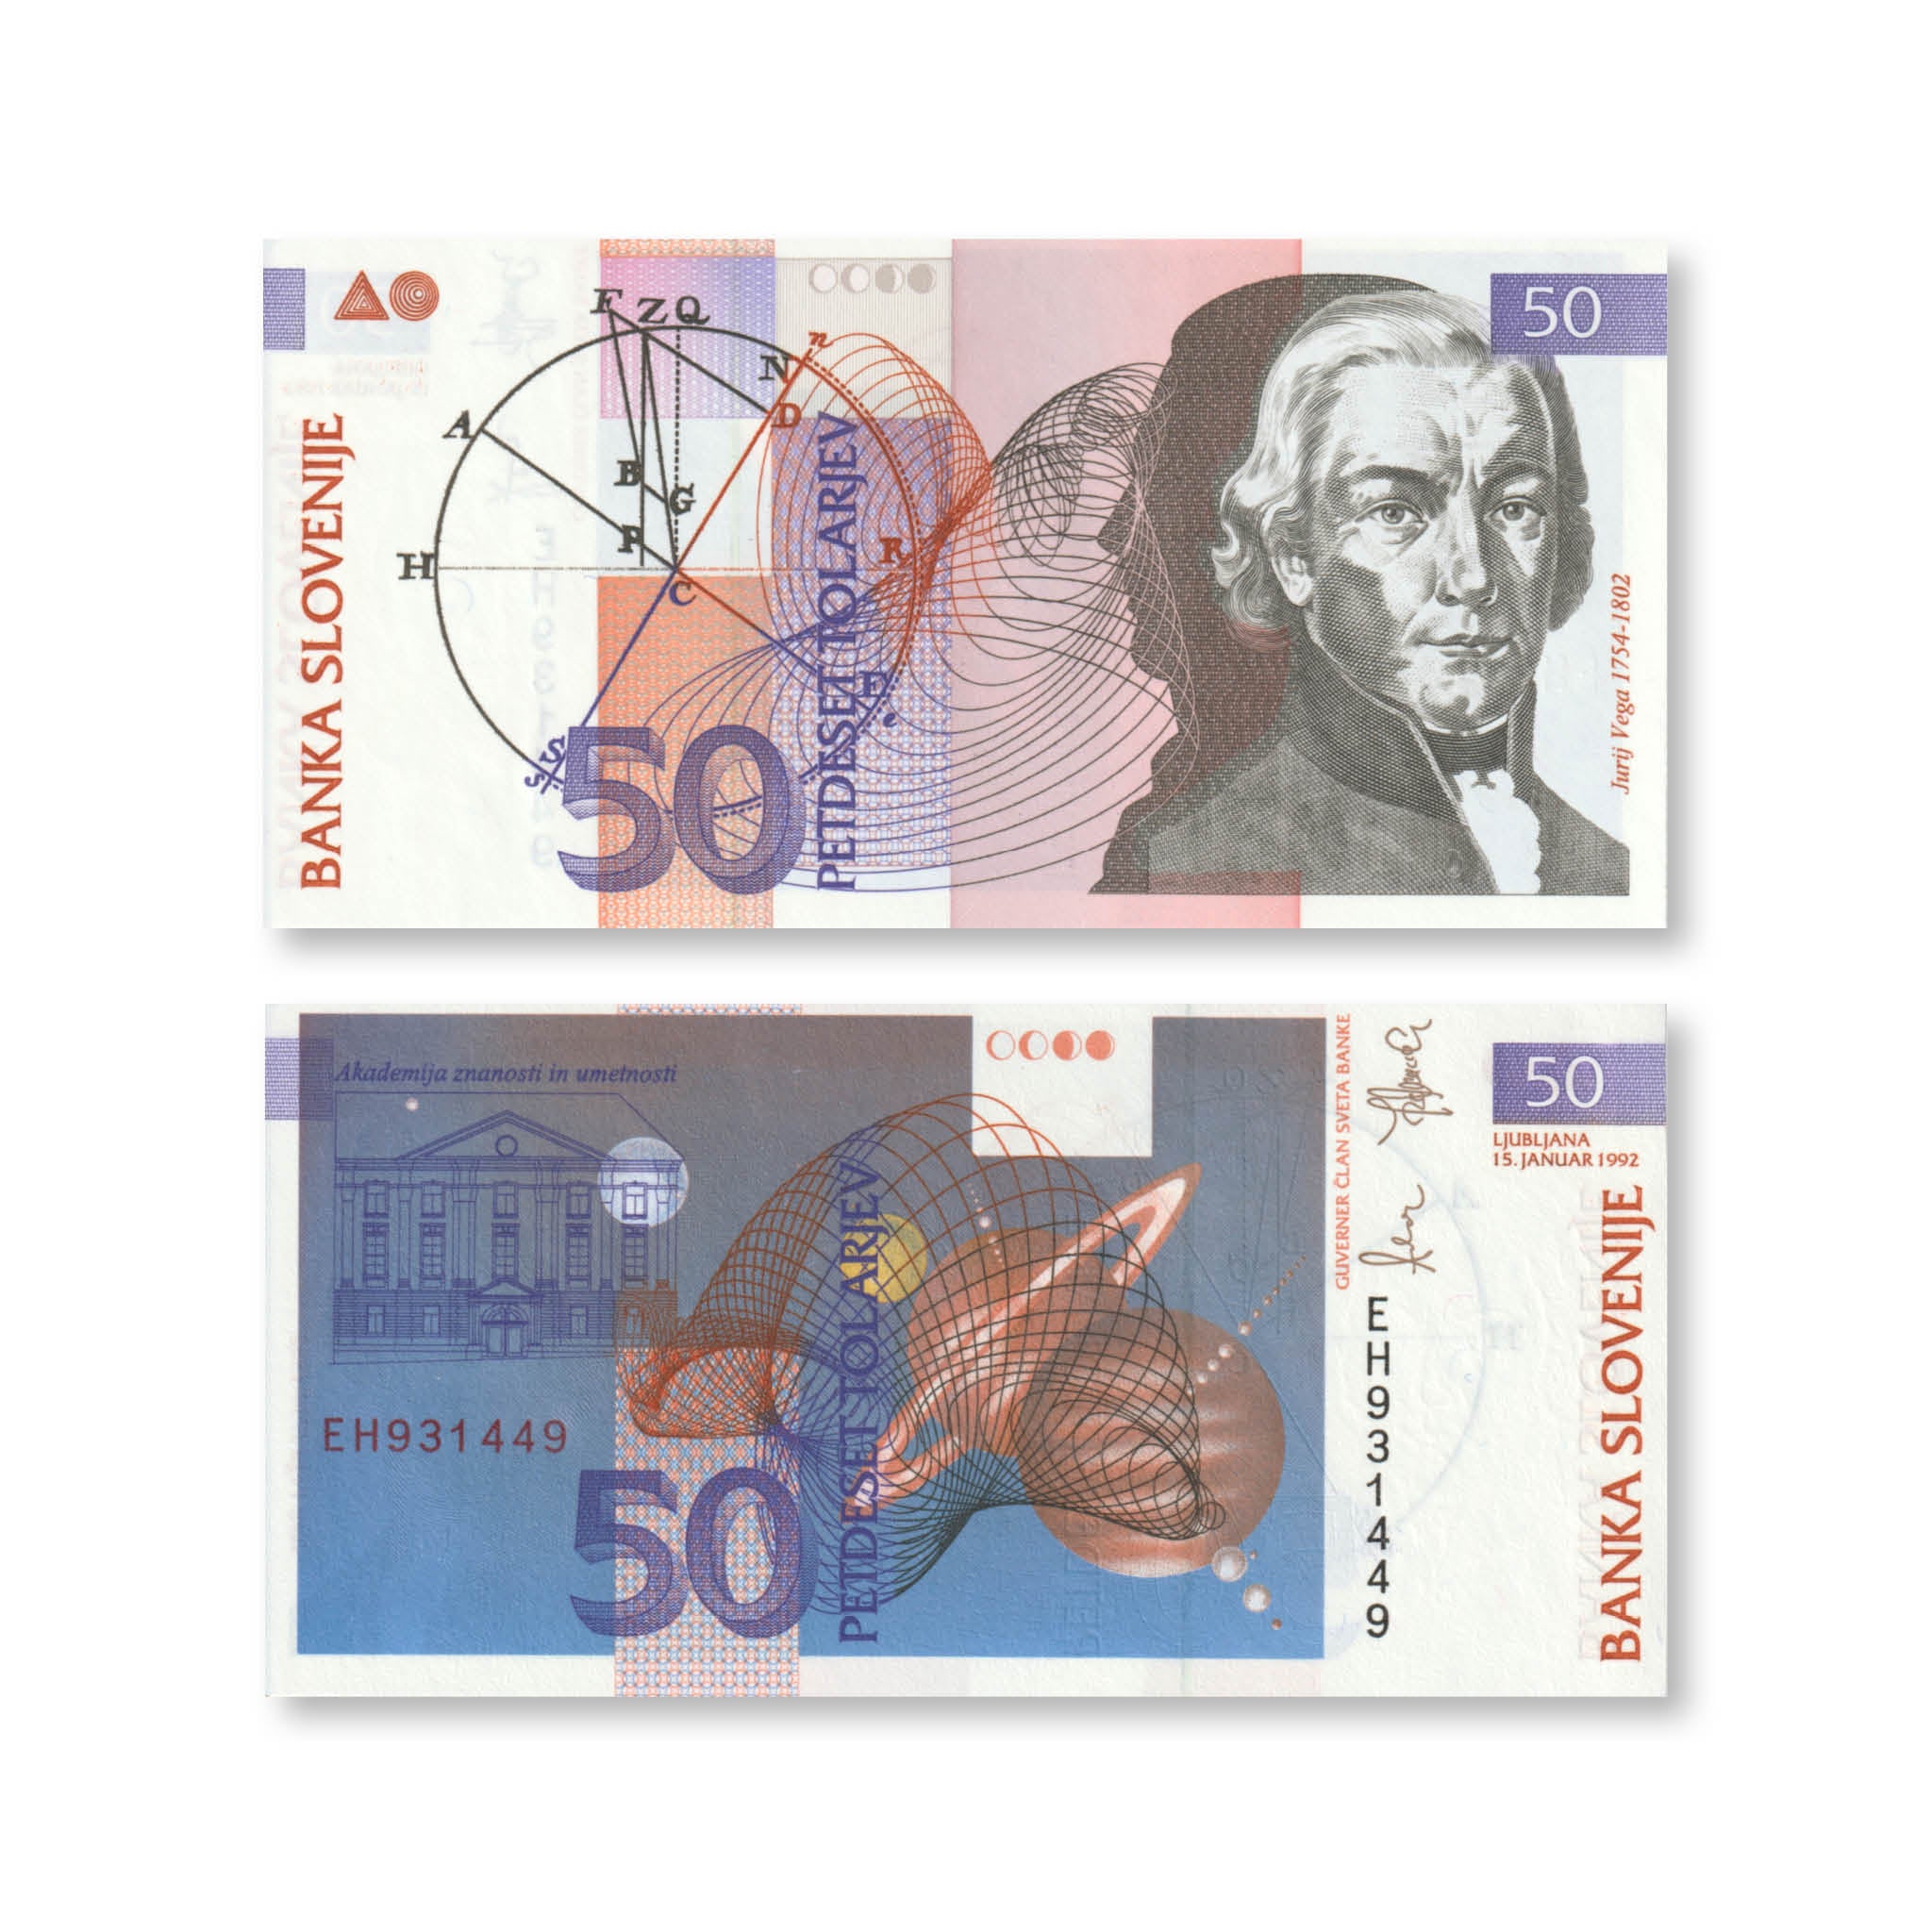 Slovenia 50 Tolarjev, 1992, B303a, P13a, UNC - Robert's World Money - World Banknotes